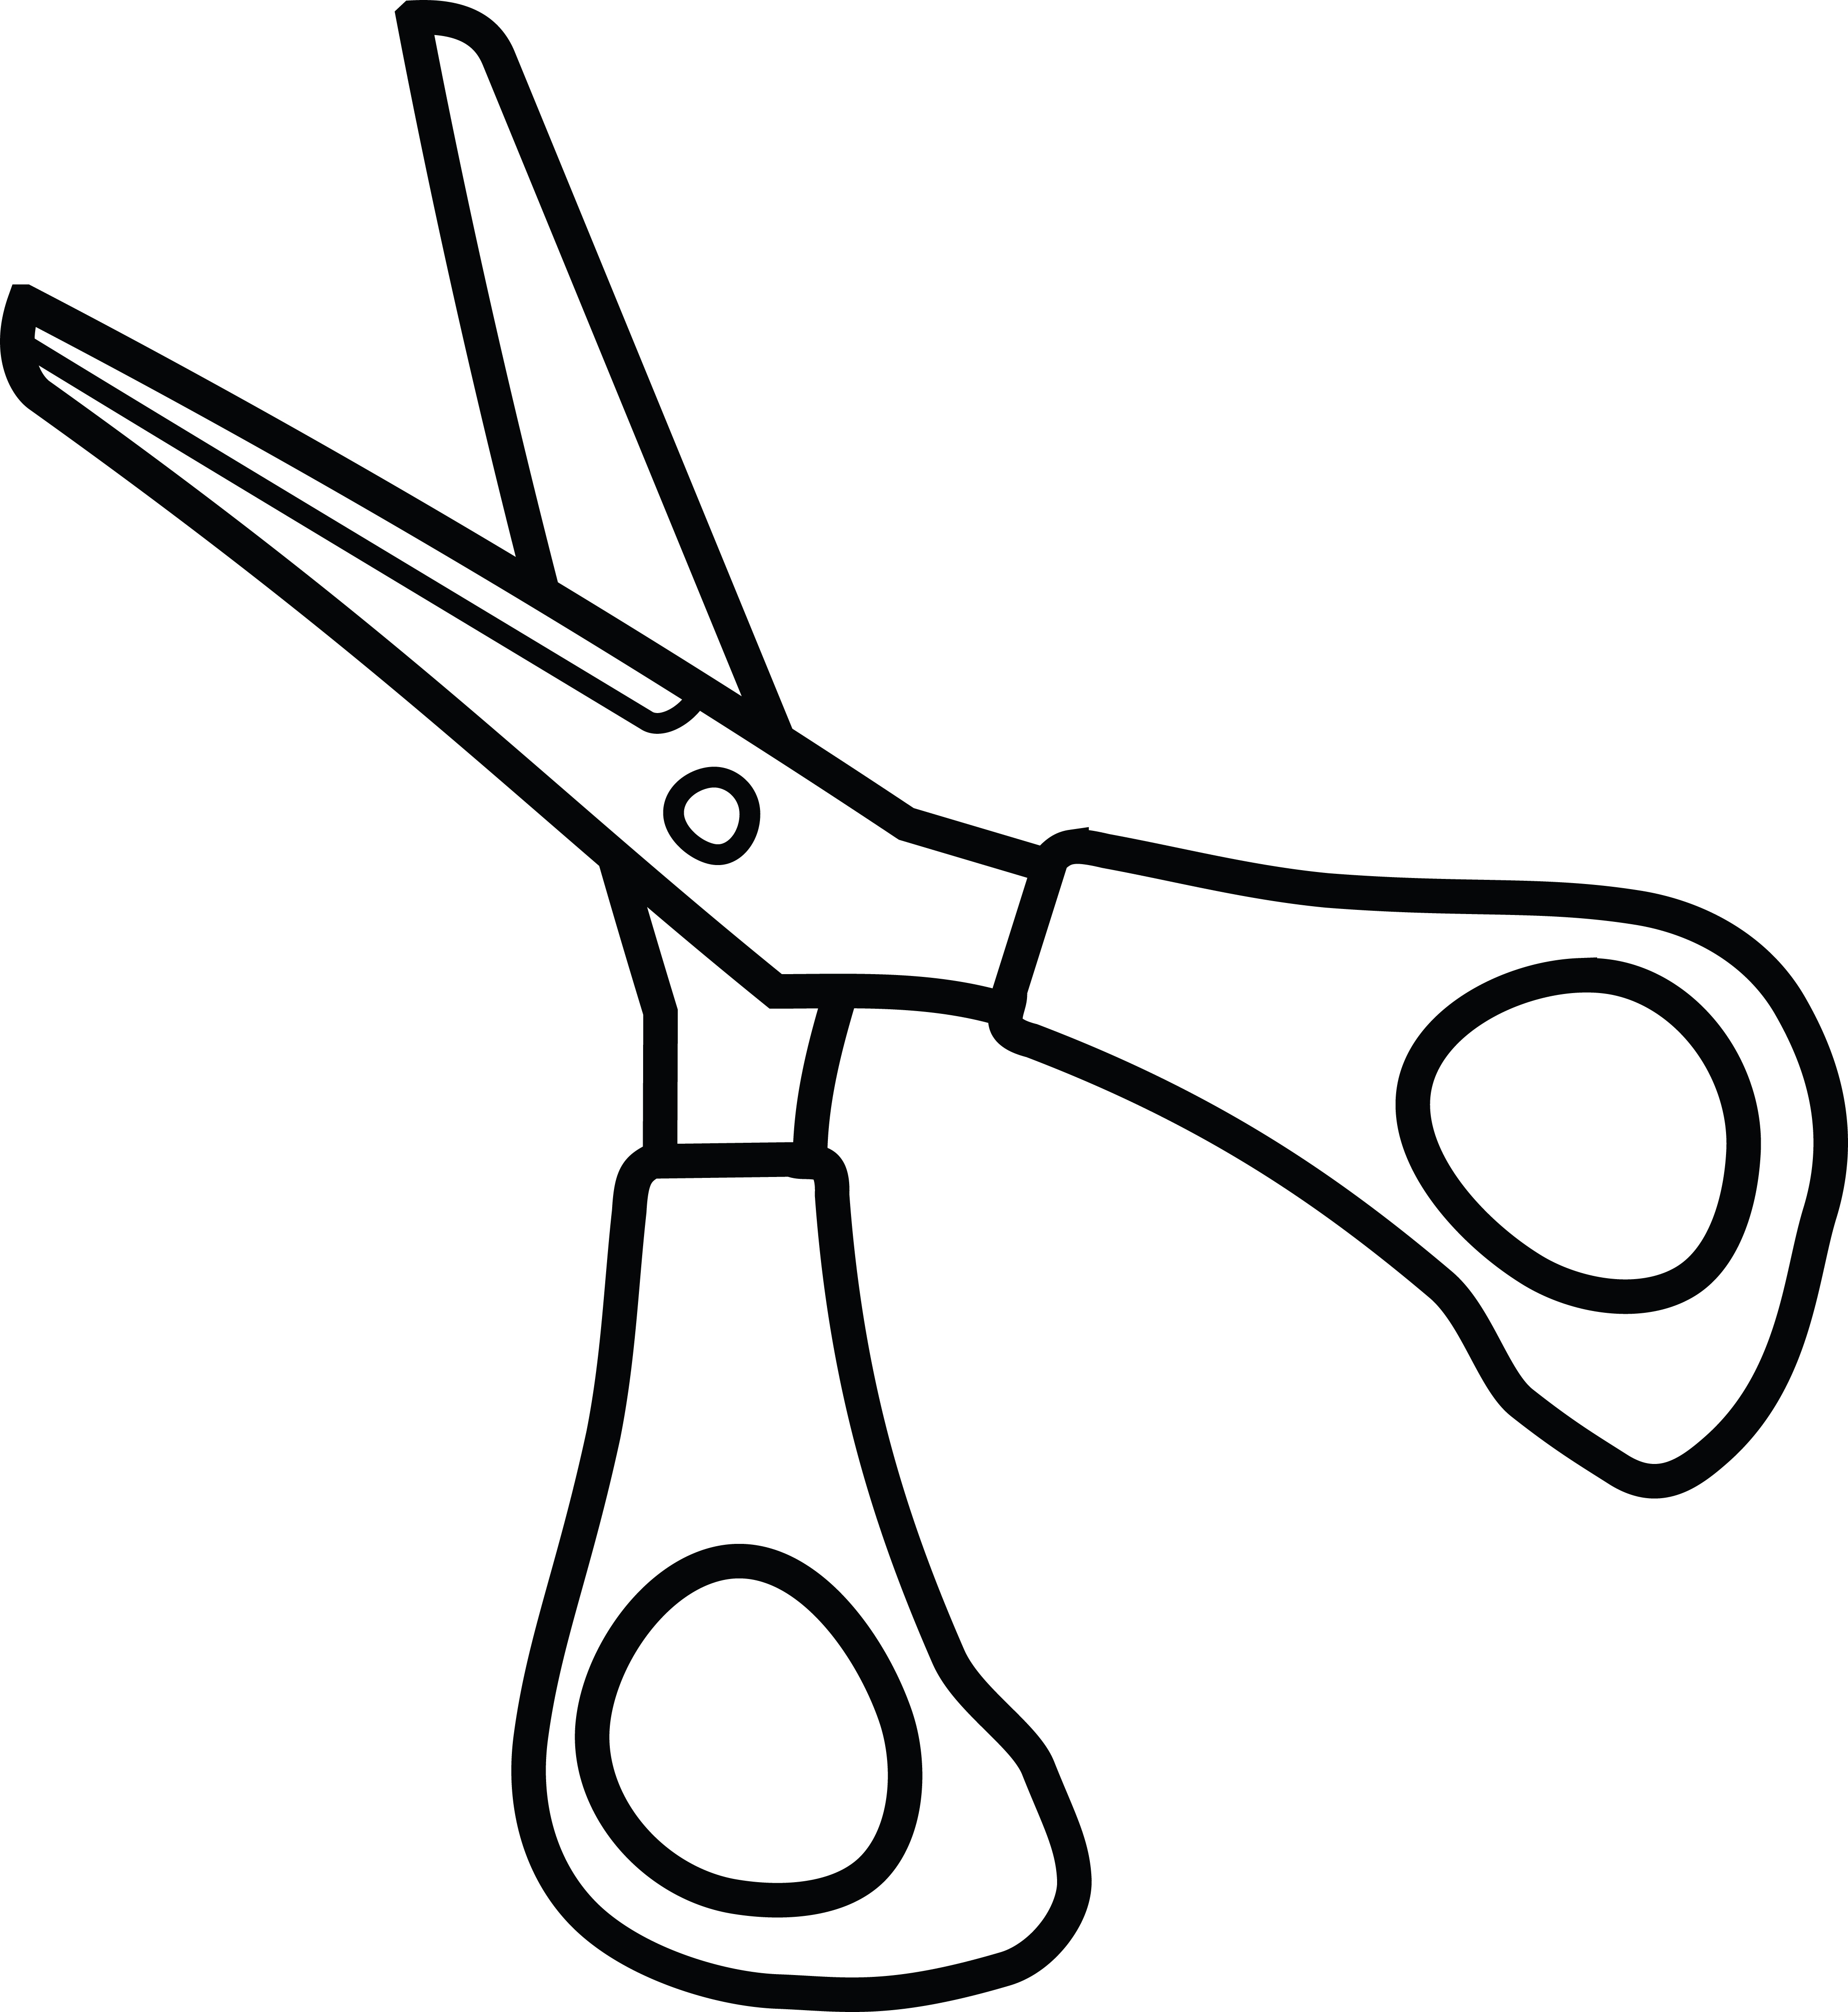 https://free.clipartof.com/1230-Free-Clipart-Of-A-Pair-Of-Scissors.jpg